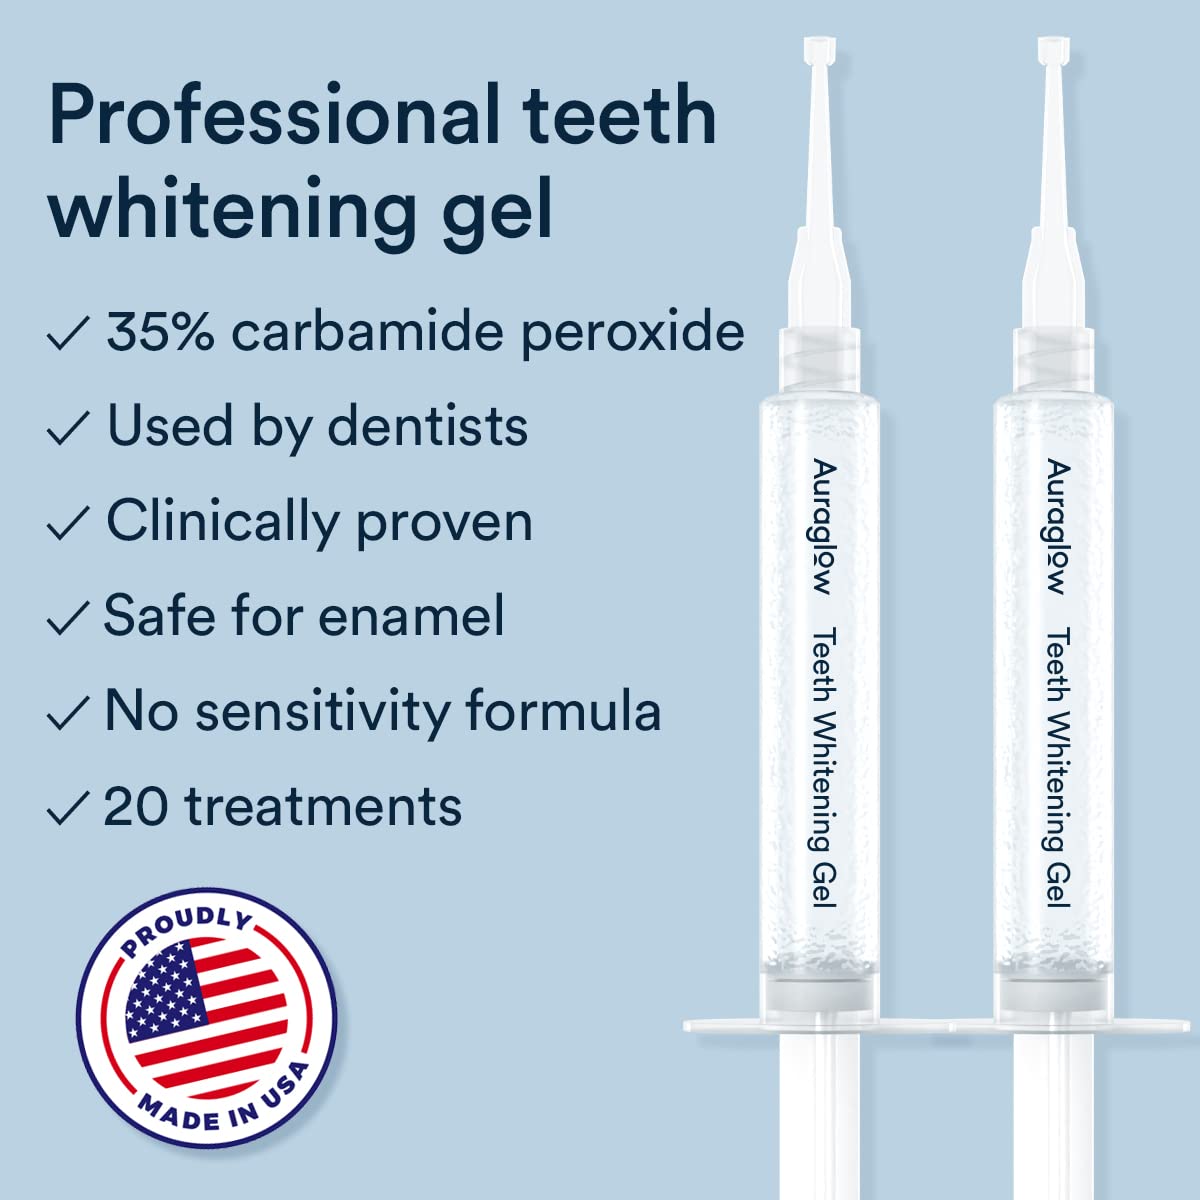 Auraglow Teeth Whitening Kit & 35% Teeth Whitening Gel Refill Pack